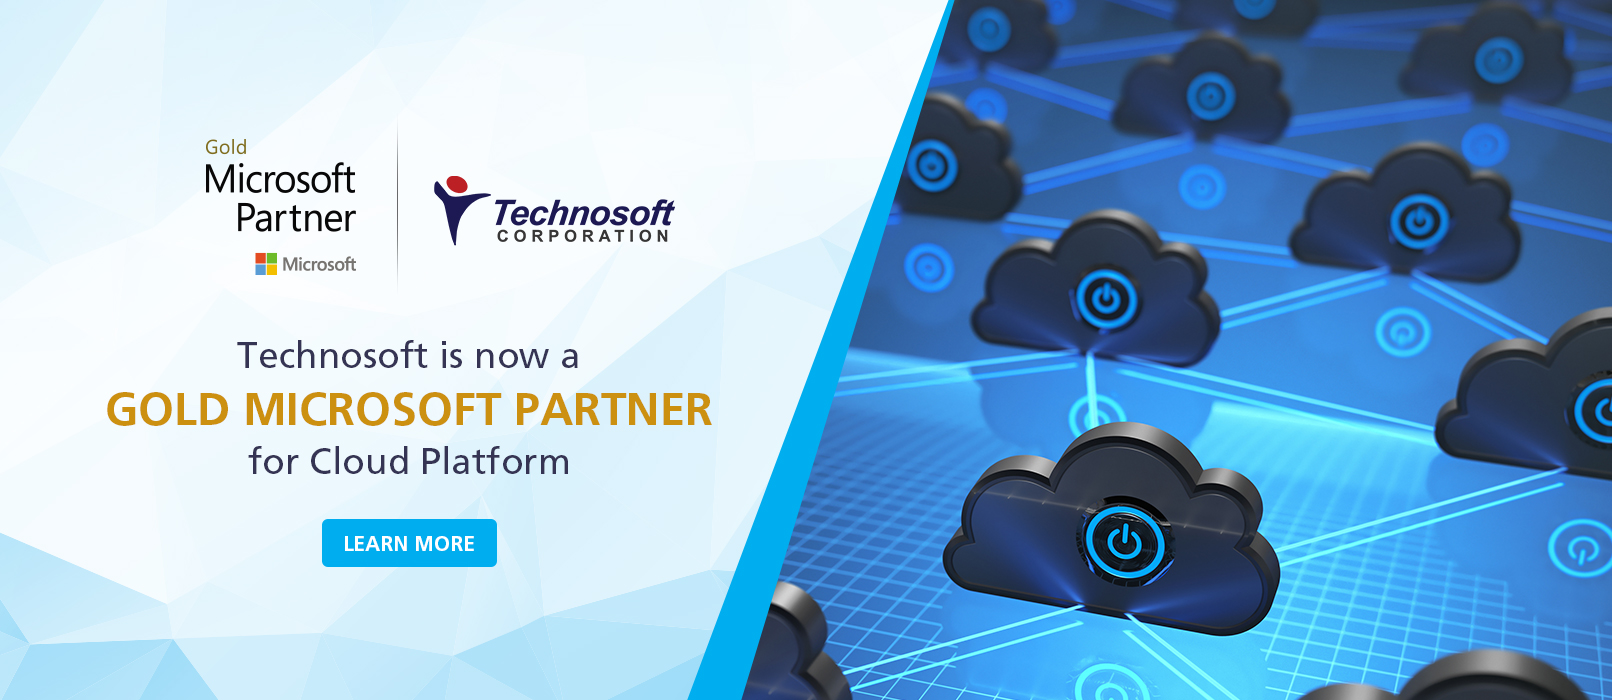 Technosoft is now a Gold Microsoft Partner for Cloud Platform